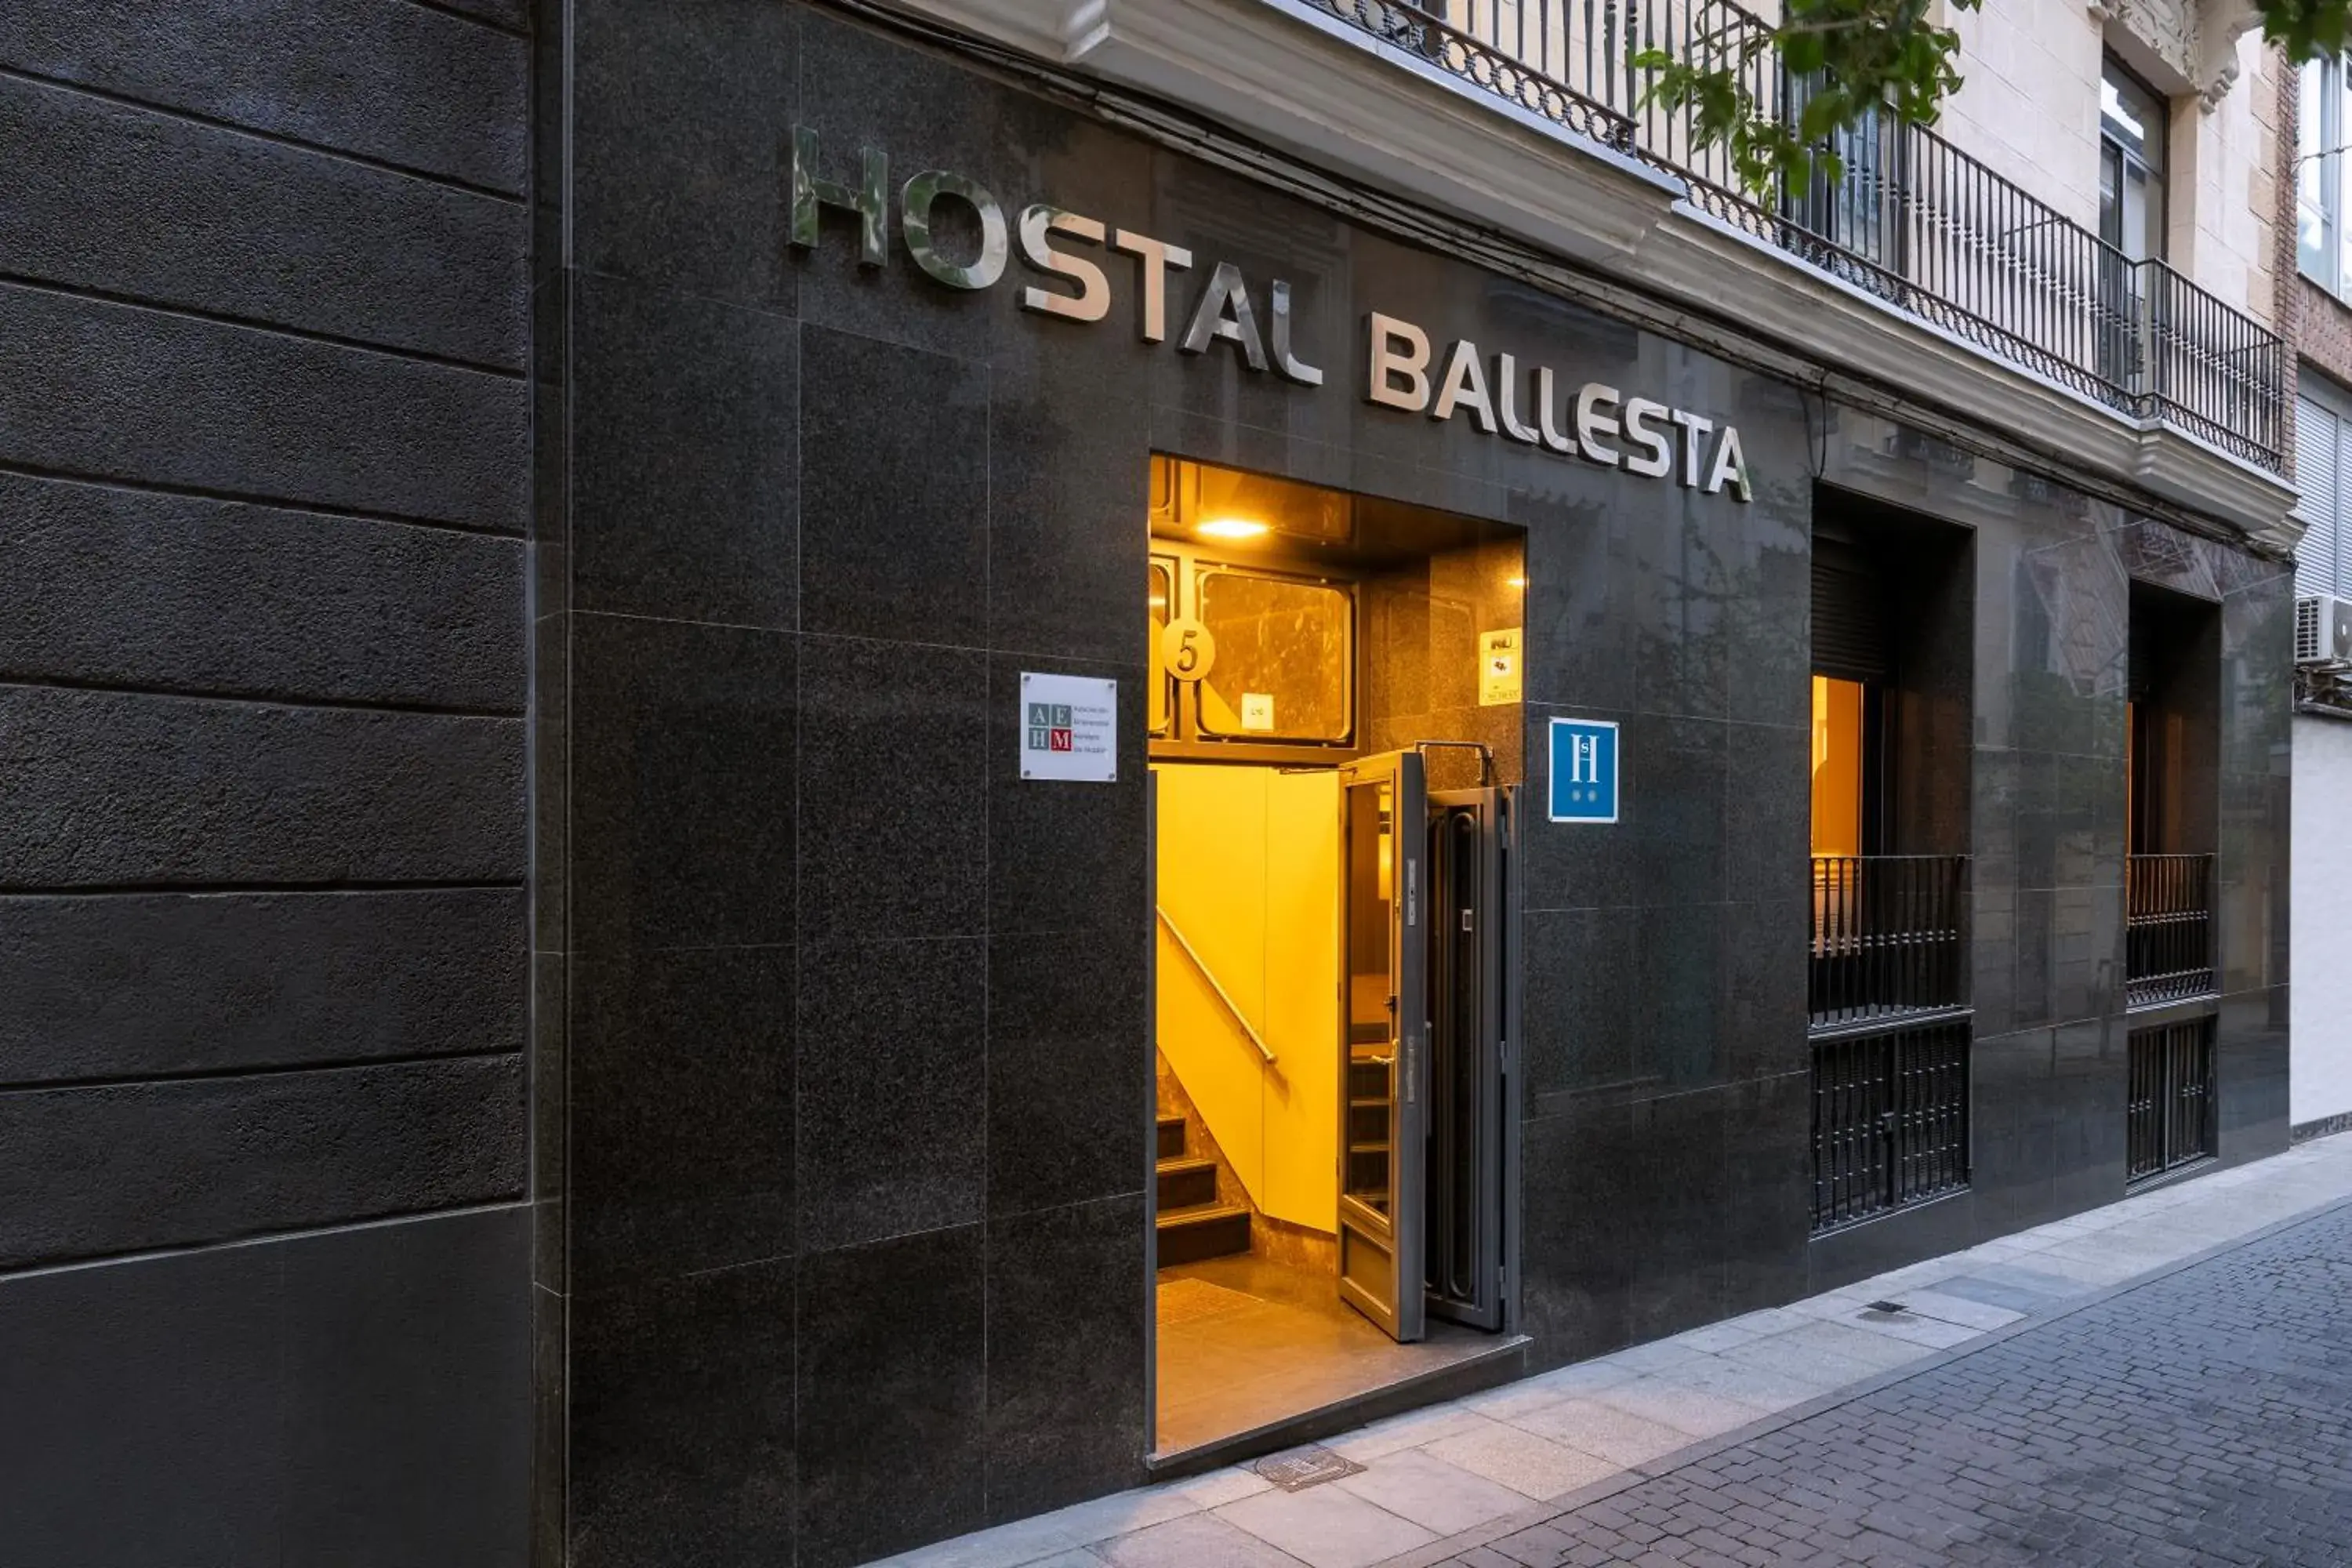 Property building in Hostal Ballesta